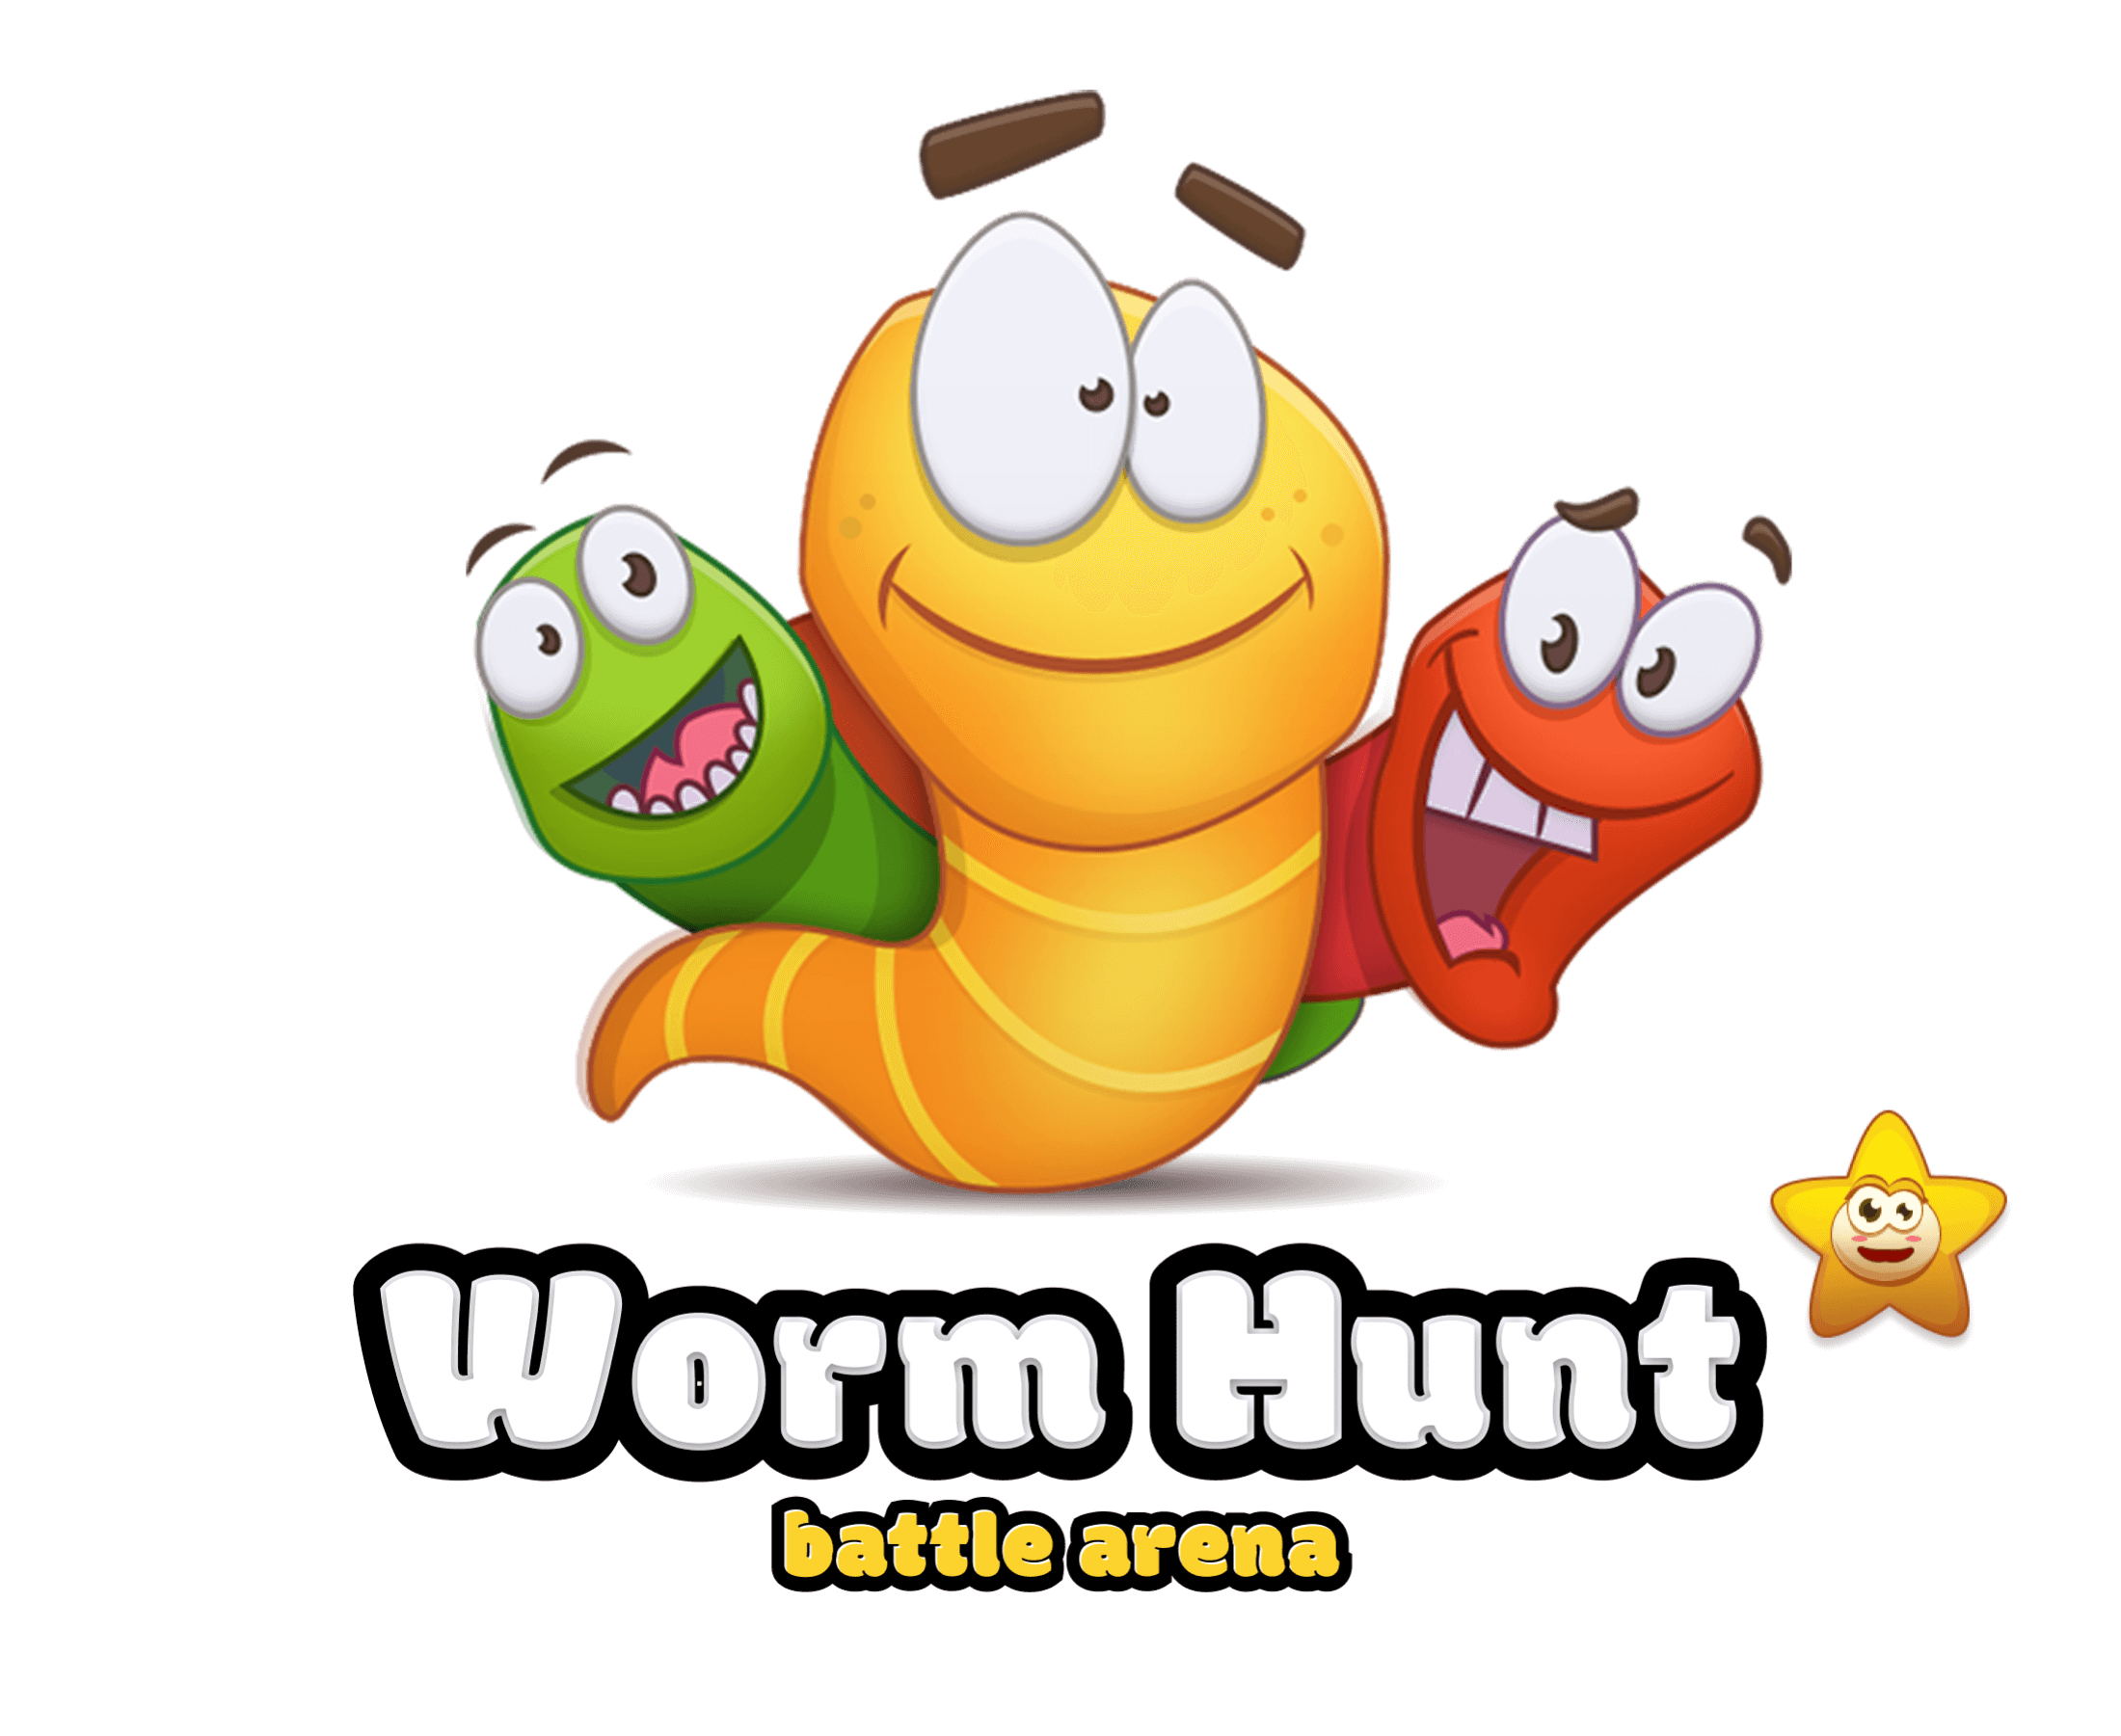 worms game logo